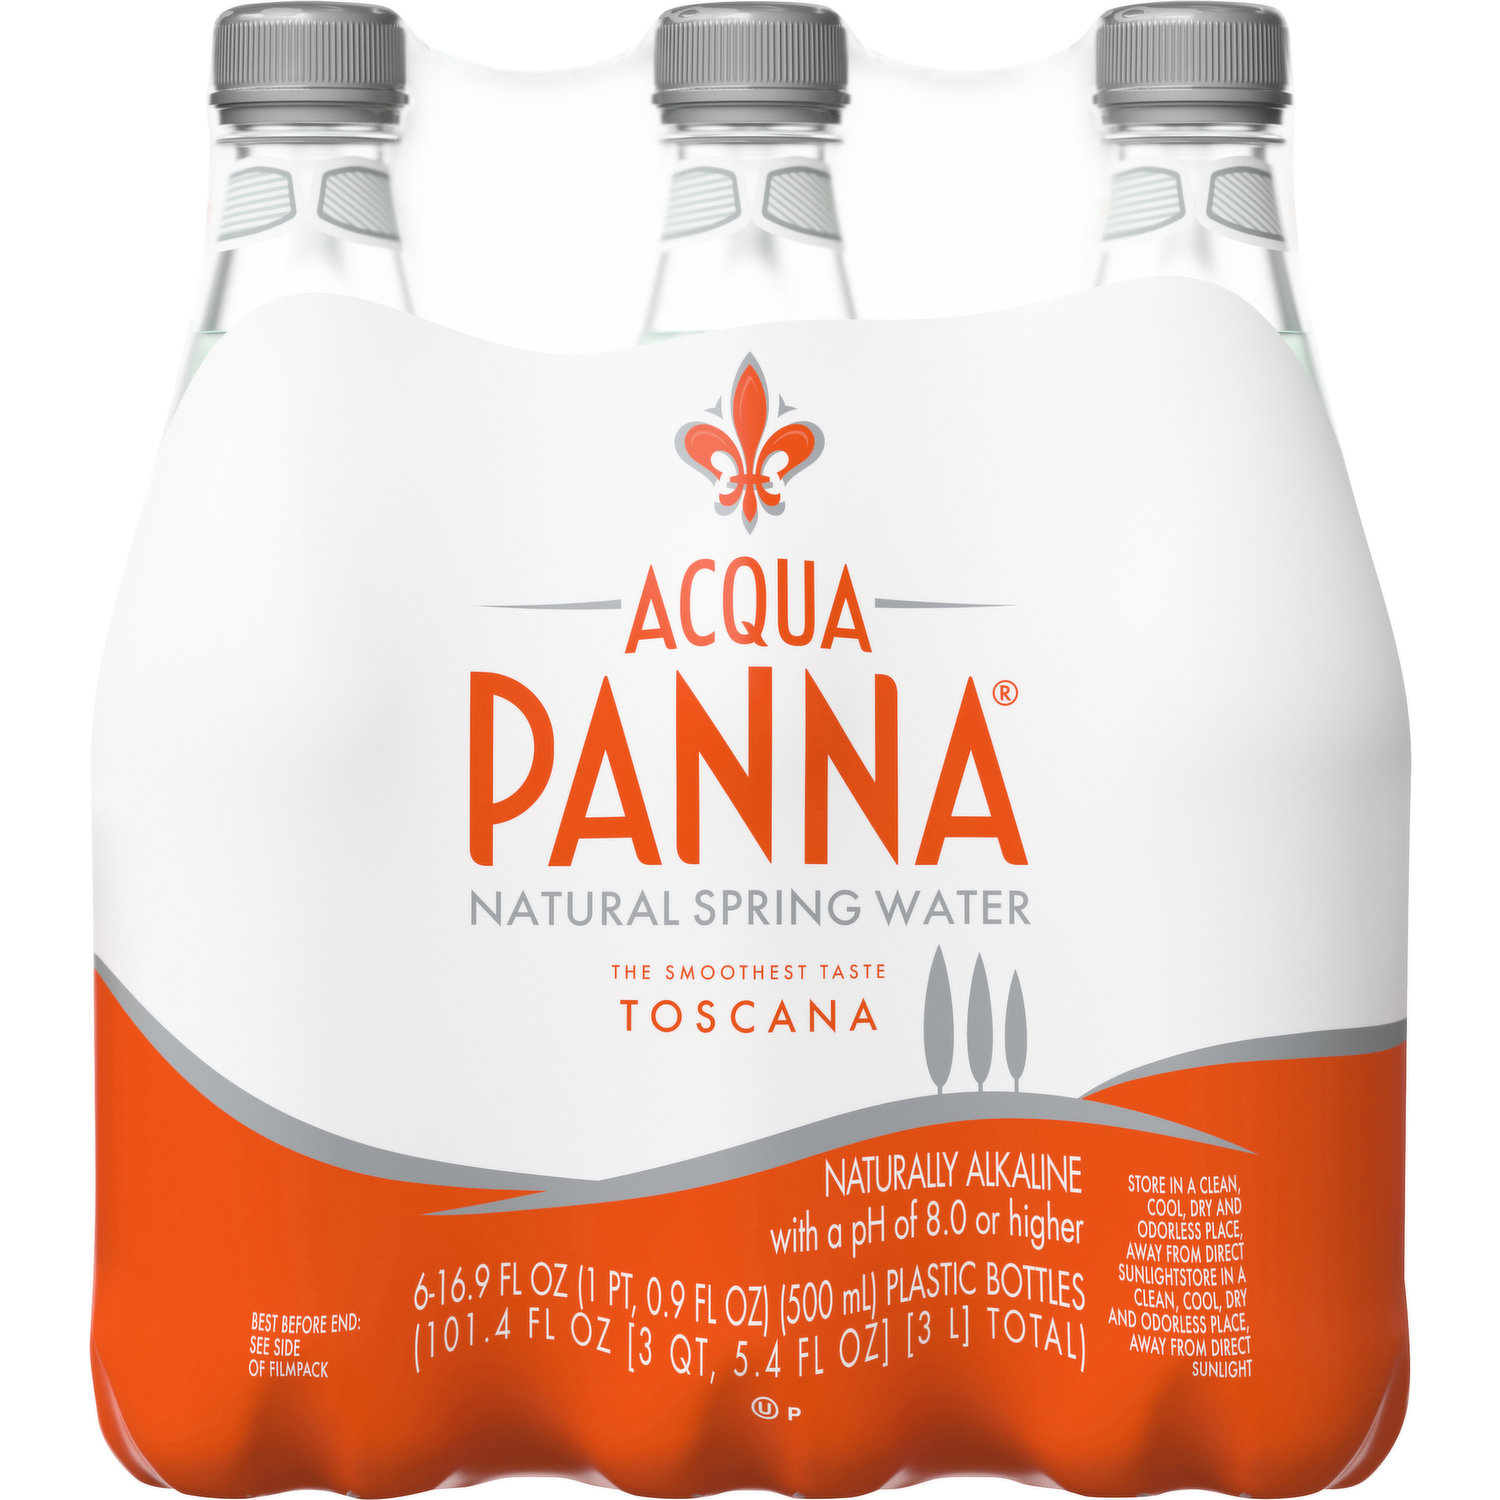 Benihana - ACQUA PANNA NATURAL SPRING WATER - Order Online